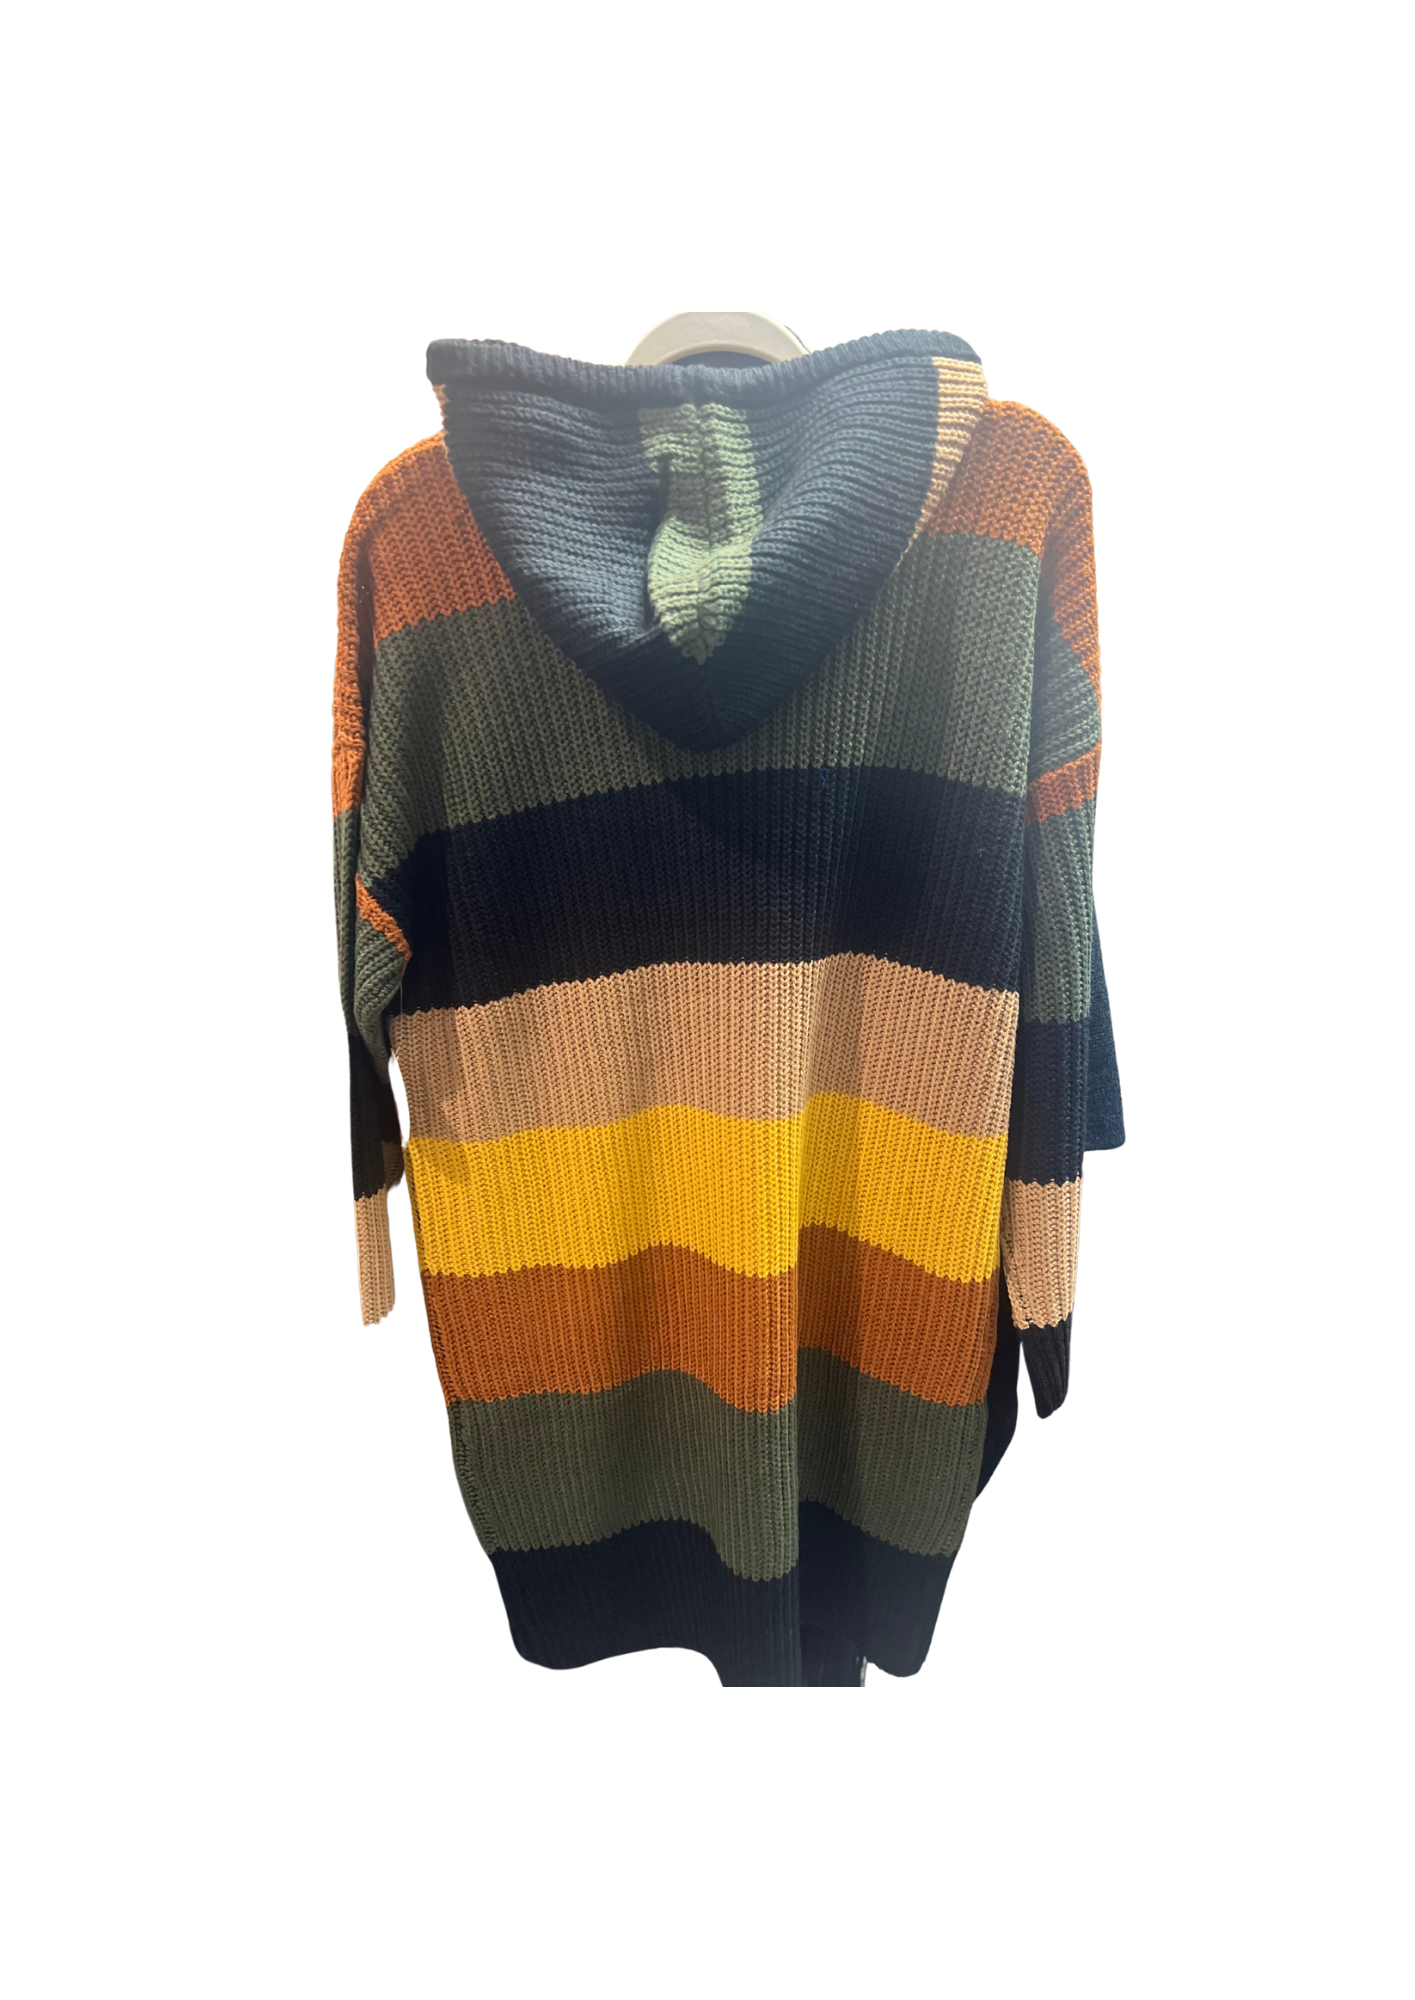 Stripe Sweater Dress -Multi Colored